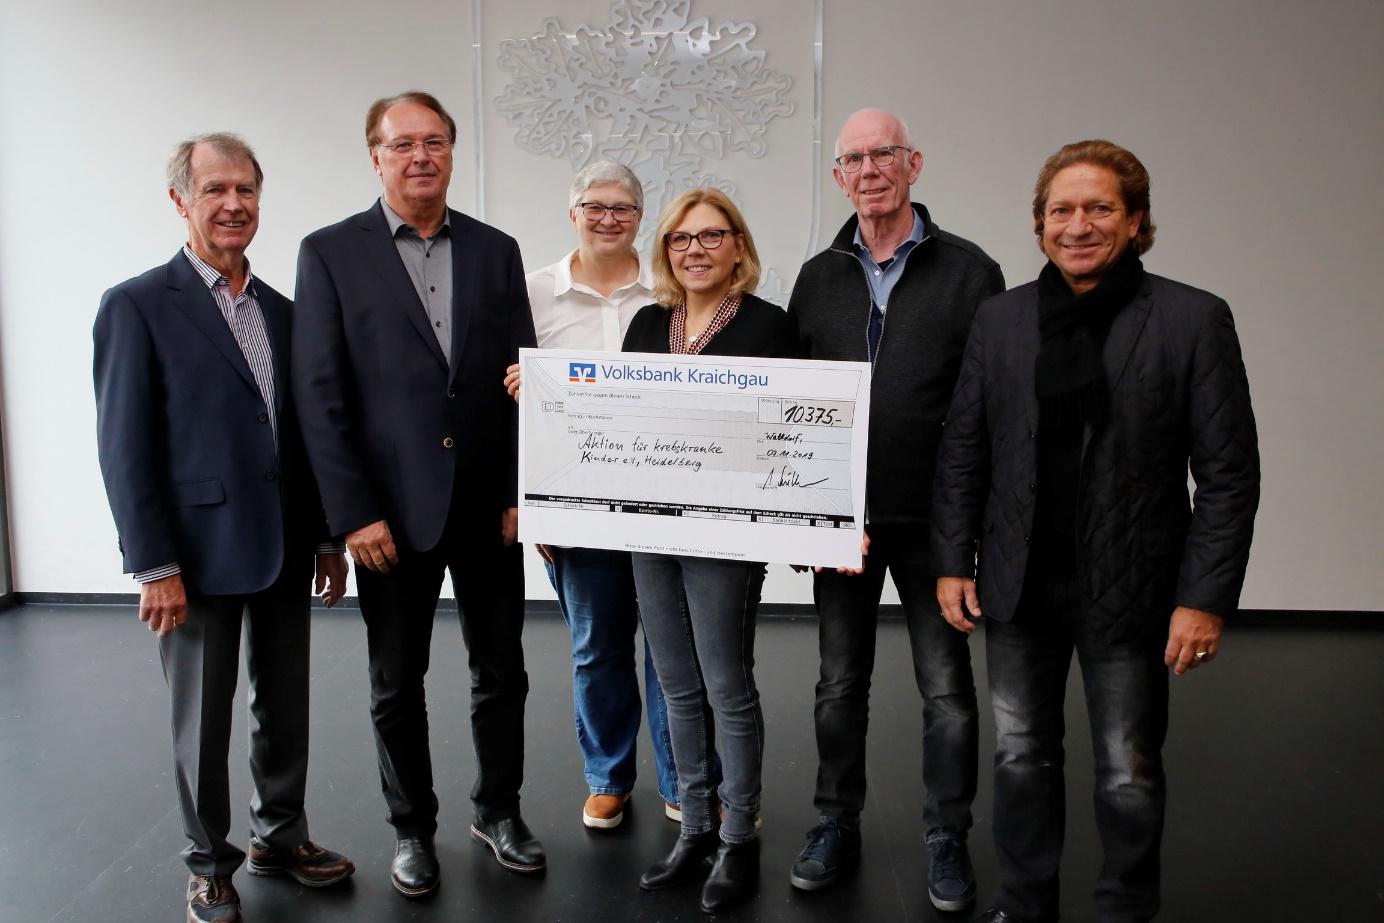 Lions Club Leimen spendet 10.375 € an „Aktion für krebskranke Kinder e. V. Heidelberg“